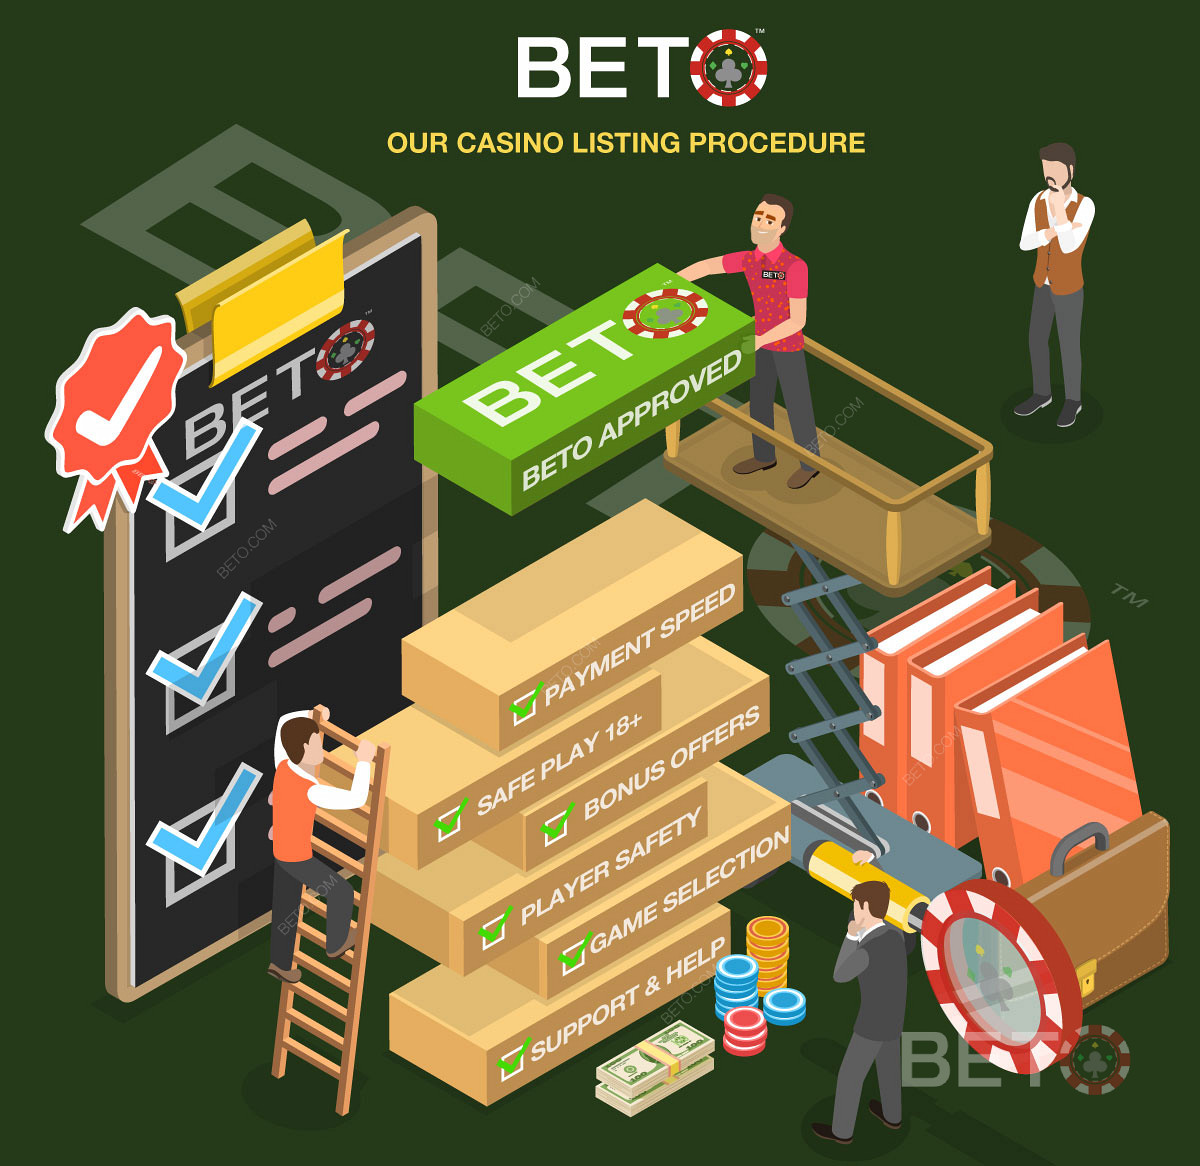 BETO.com 上的詳細賭場審查流程